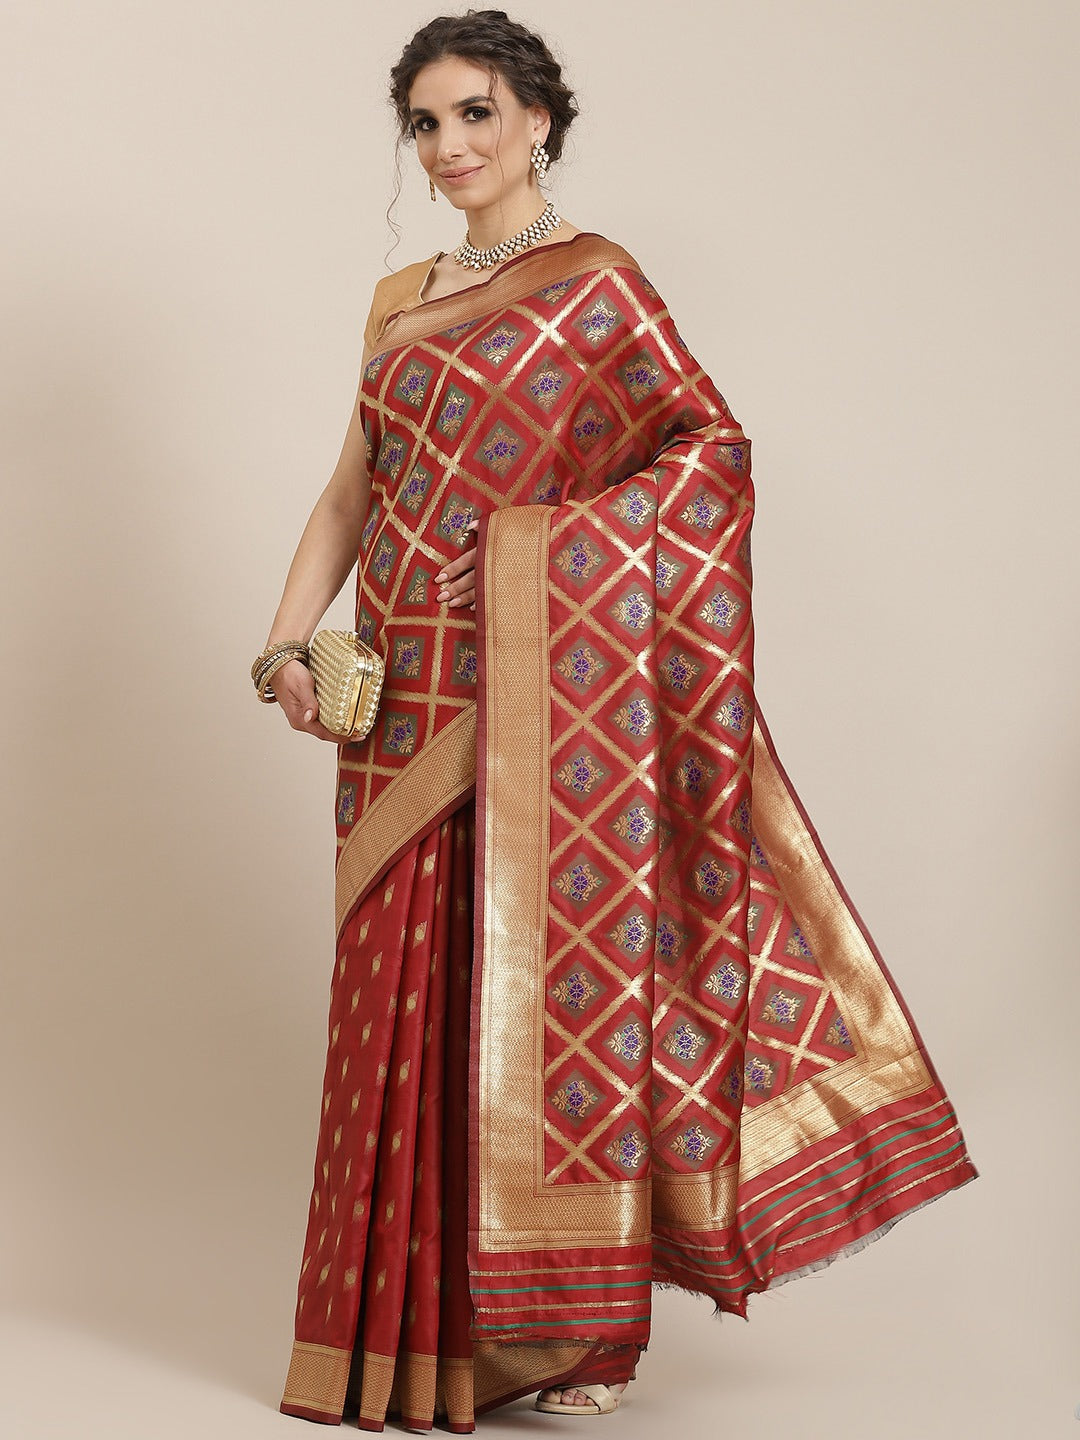 Kanjivaram Red Silk Saree Square pattern Design.